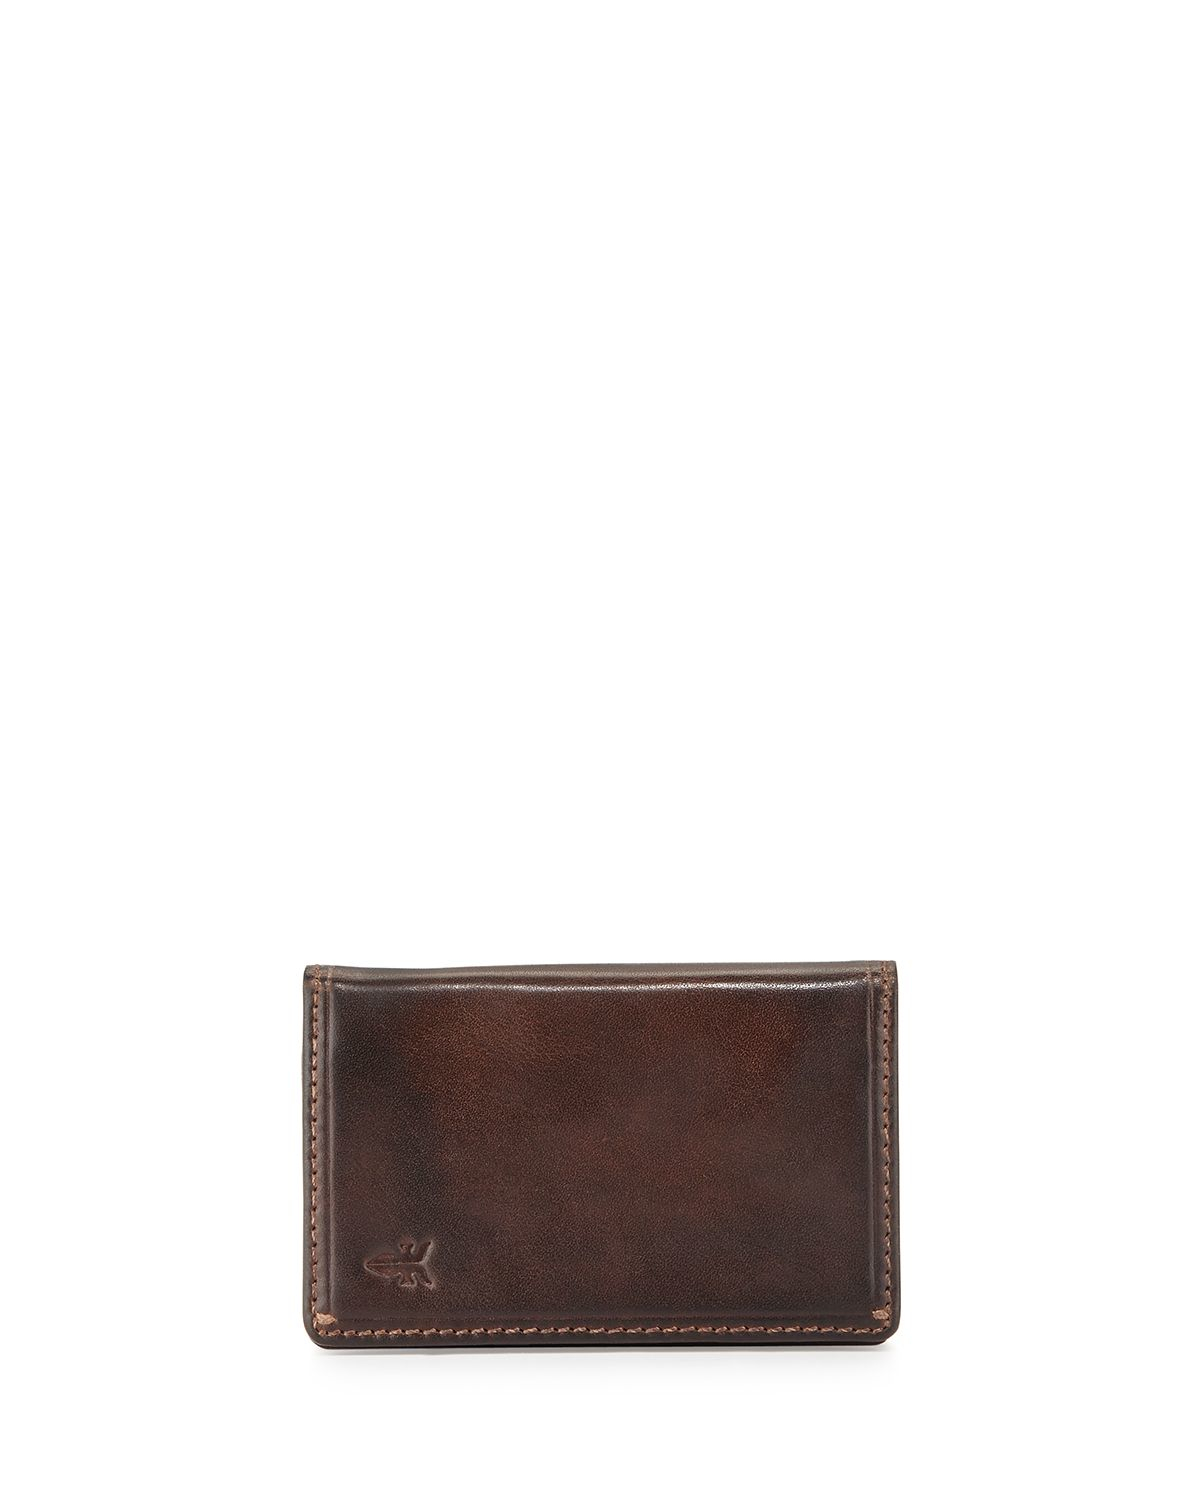 Frye Logan Small Leather Bi-fold Wallet in Brown for Men (DARK BROWN) | Lyst